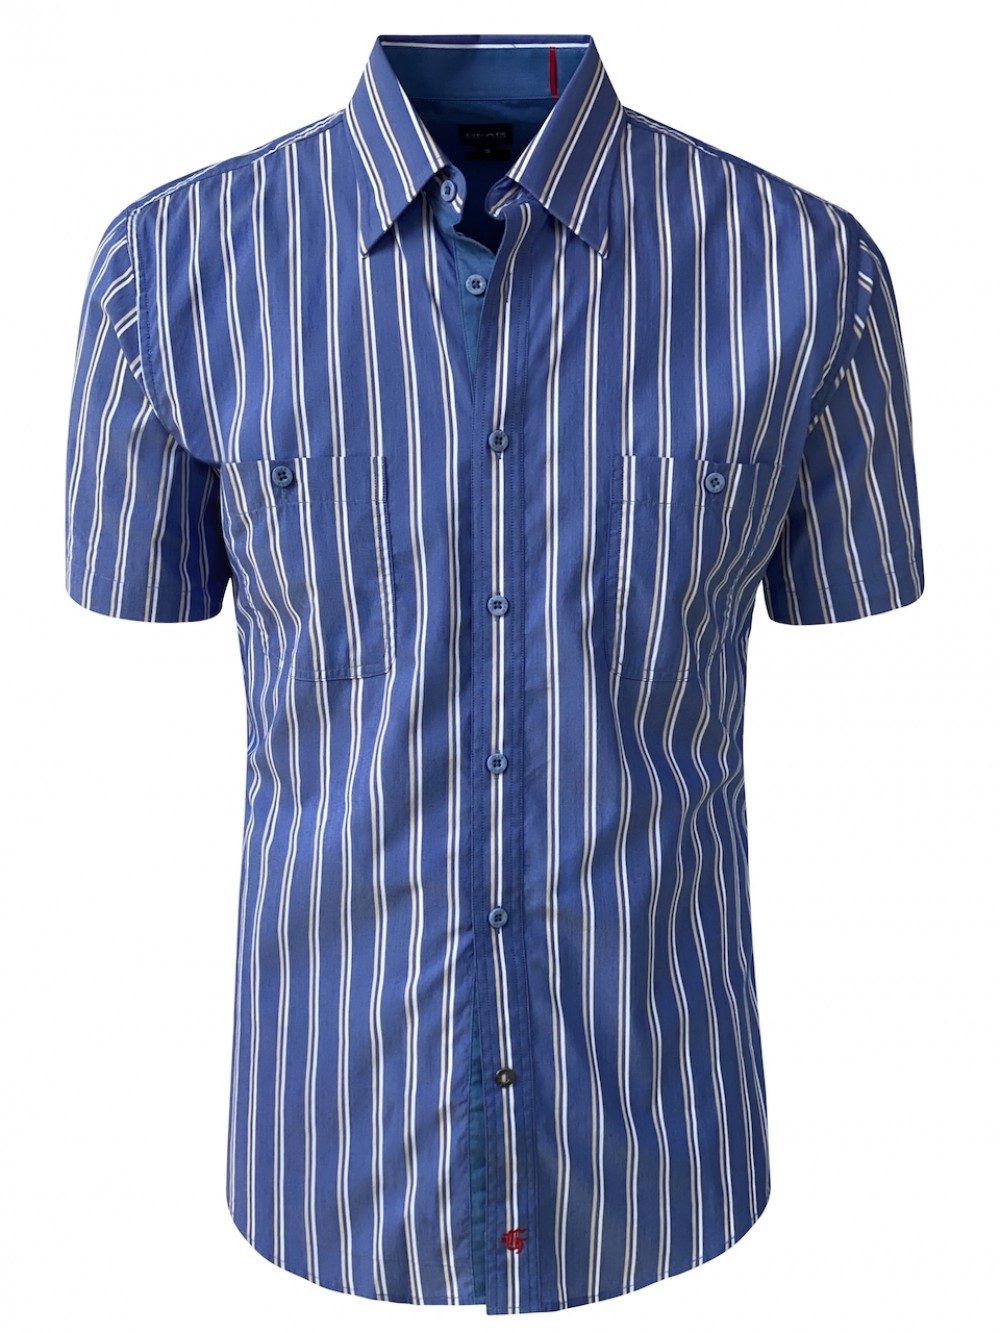  RAFFAELE SHM1302 Slim fit Cotton Shirt medium blue